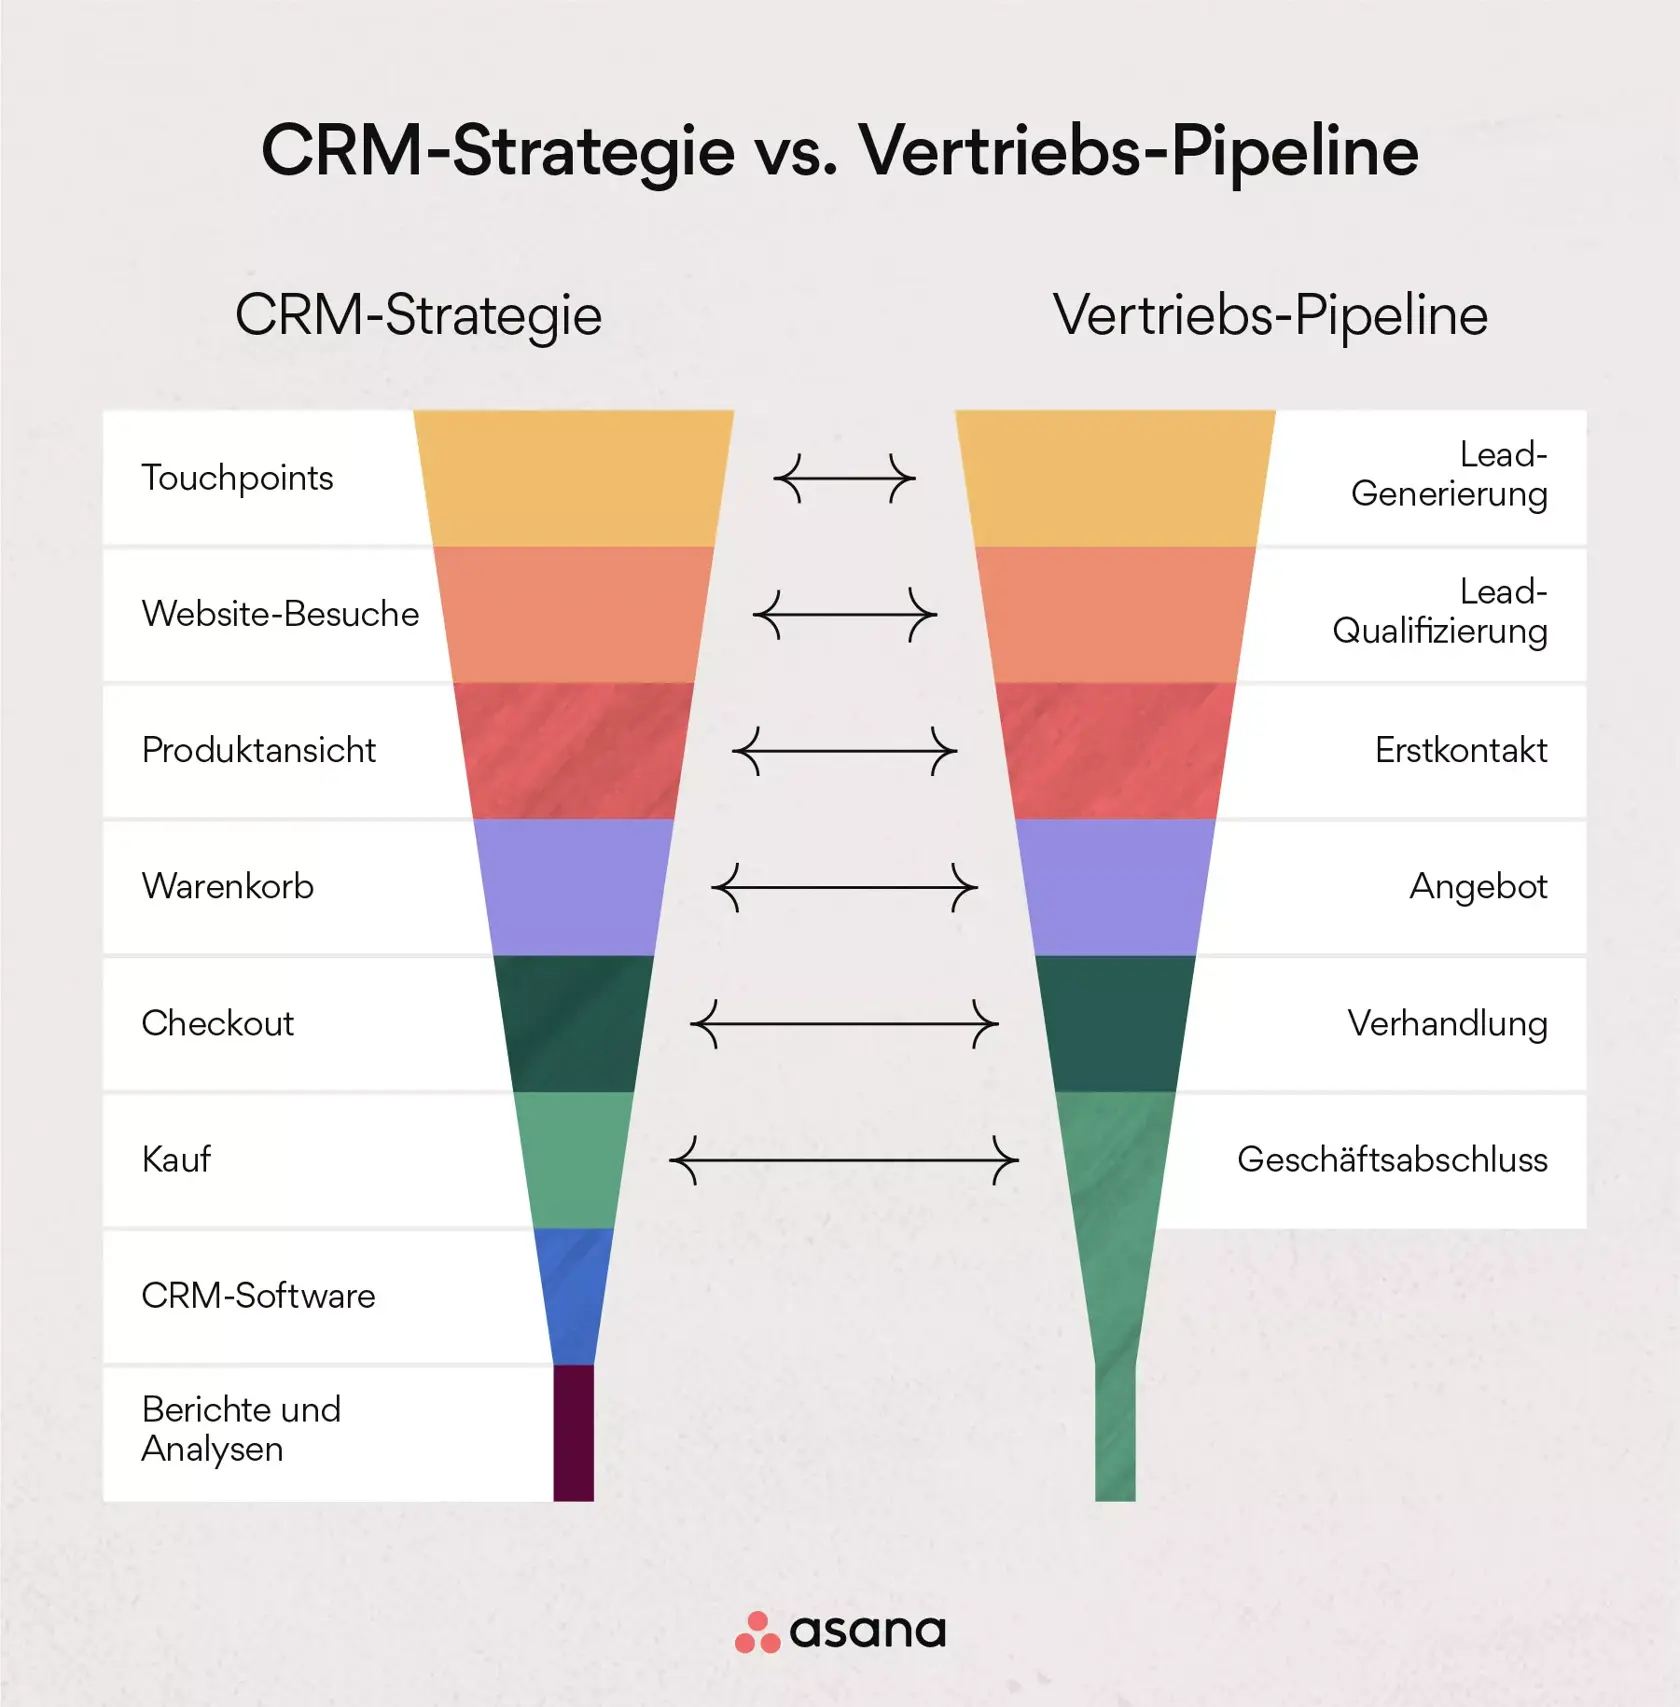 CRM-Strategie vs. Vertriebs-Pipeline